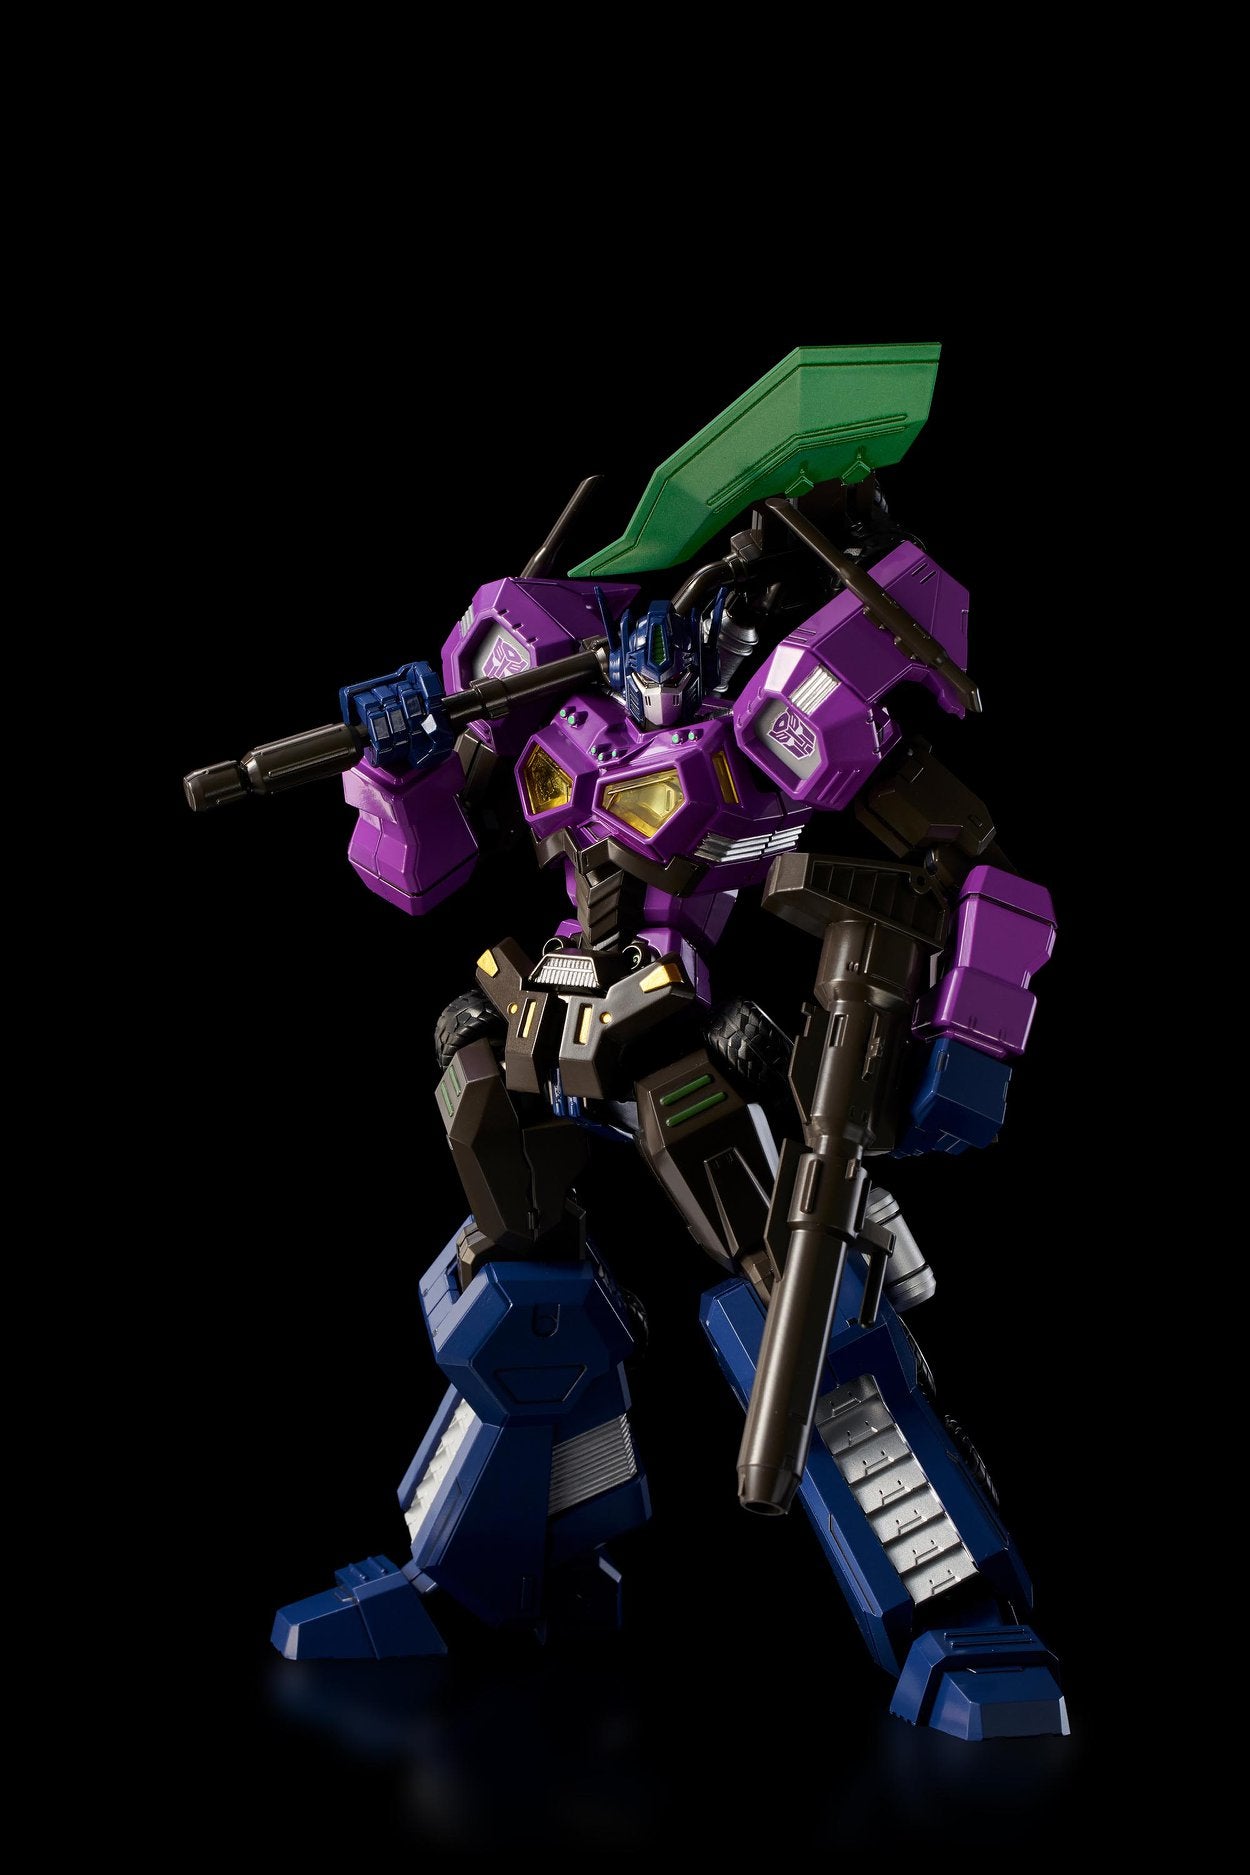 Furai Model Transformers Shattered Glass Optimus Prime (Attack Mode)